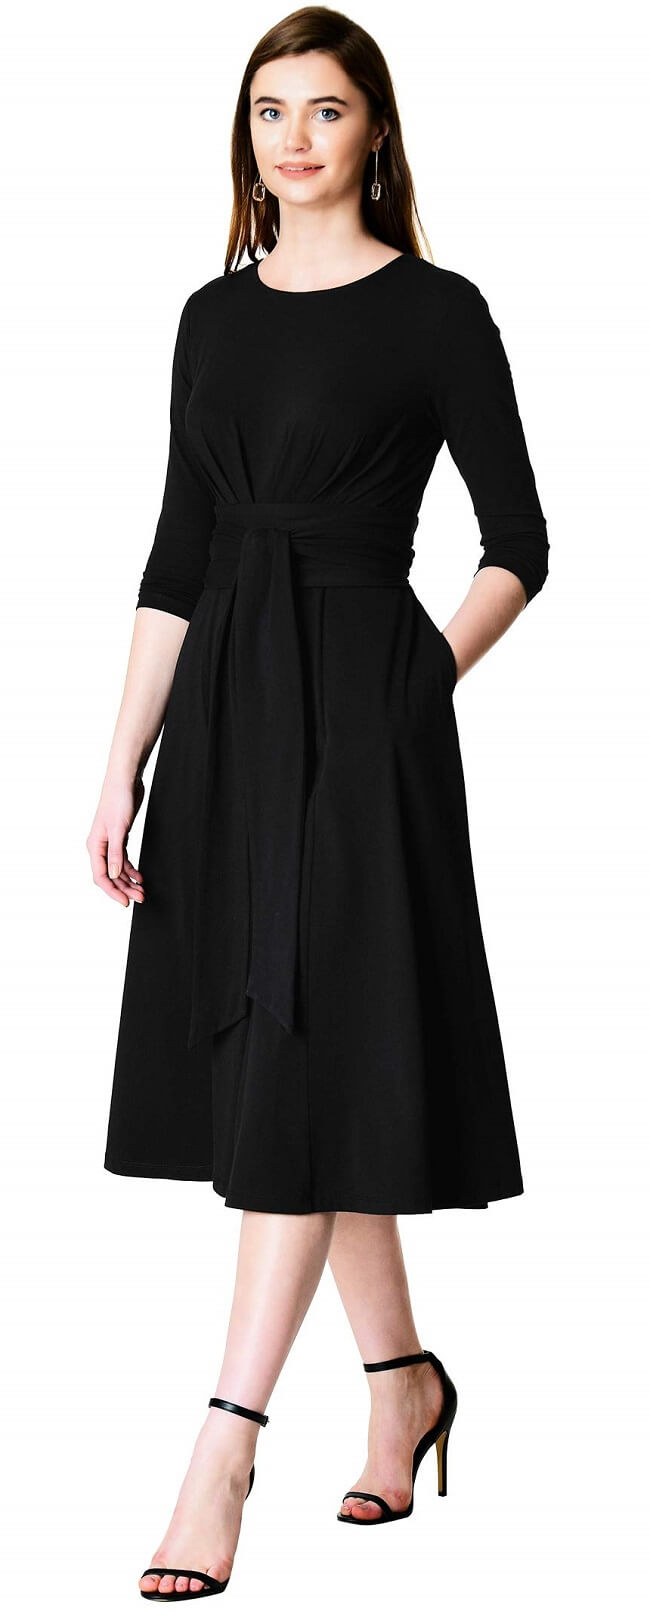 Buy > long black dress funeral > in stock